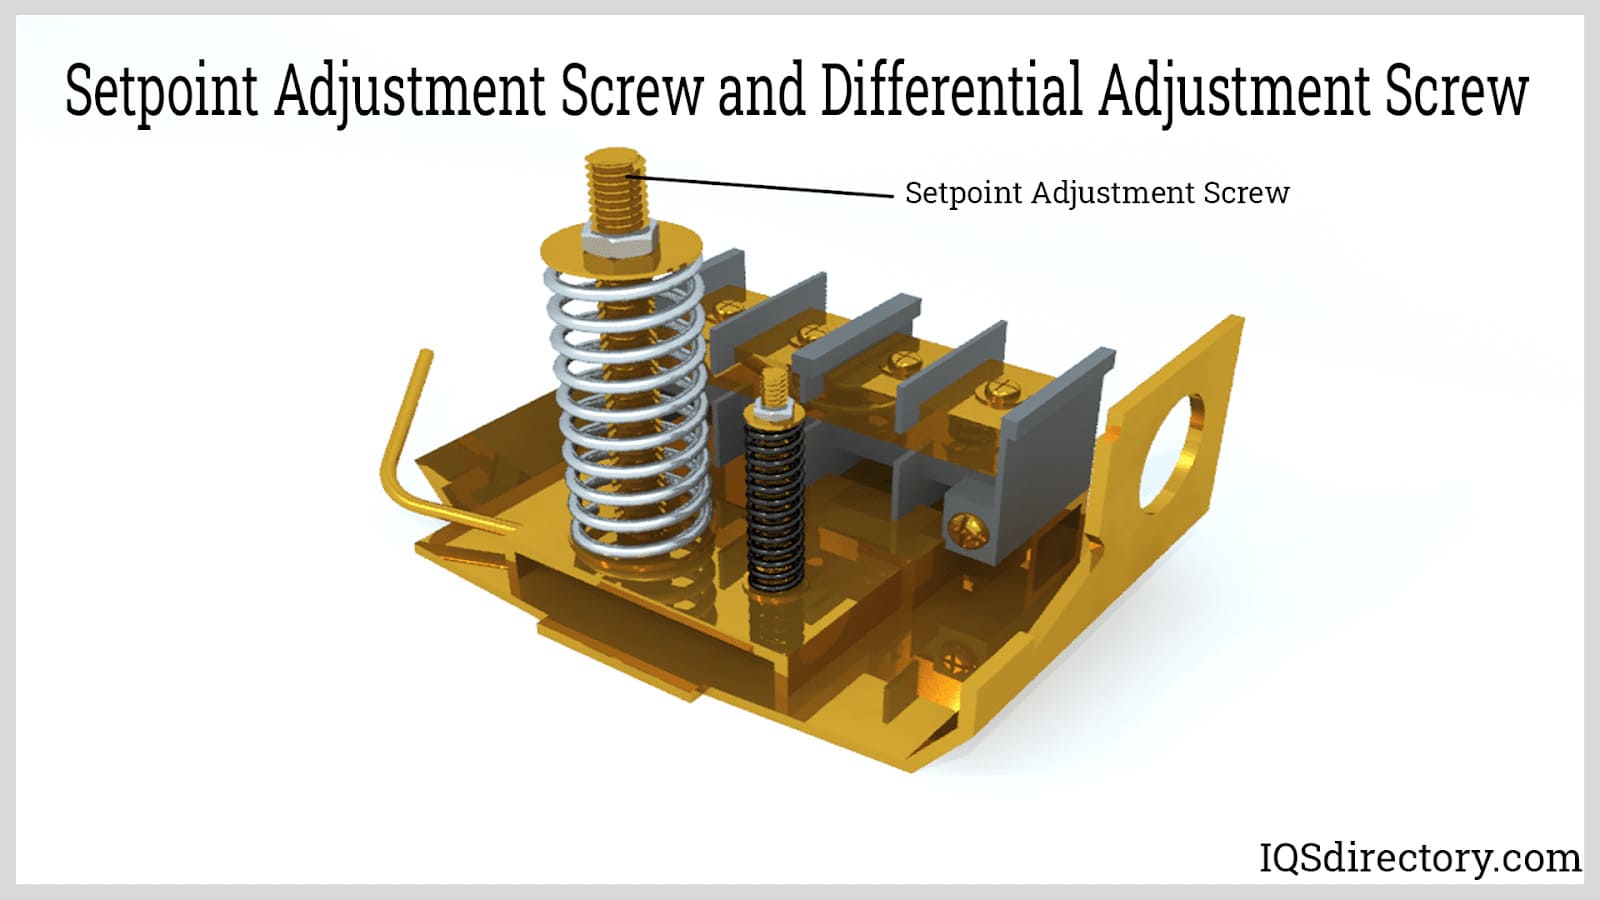 Setpoint Adjustment Screw and Differential Adjustment Screw